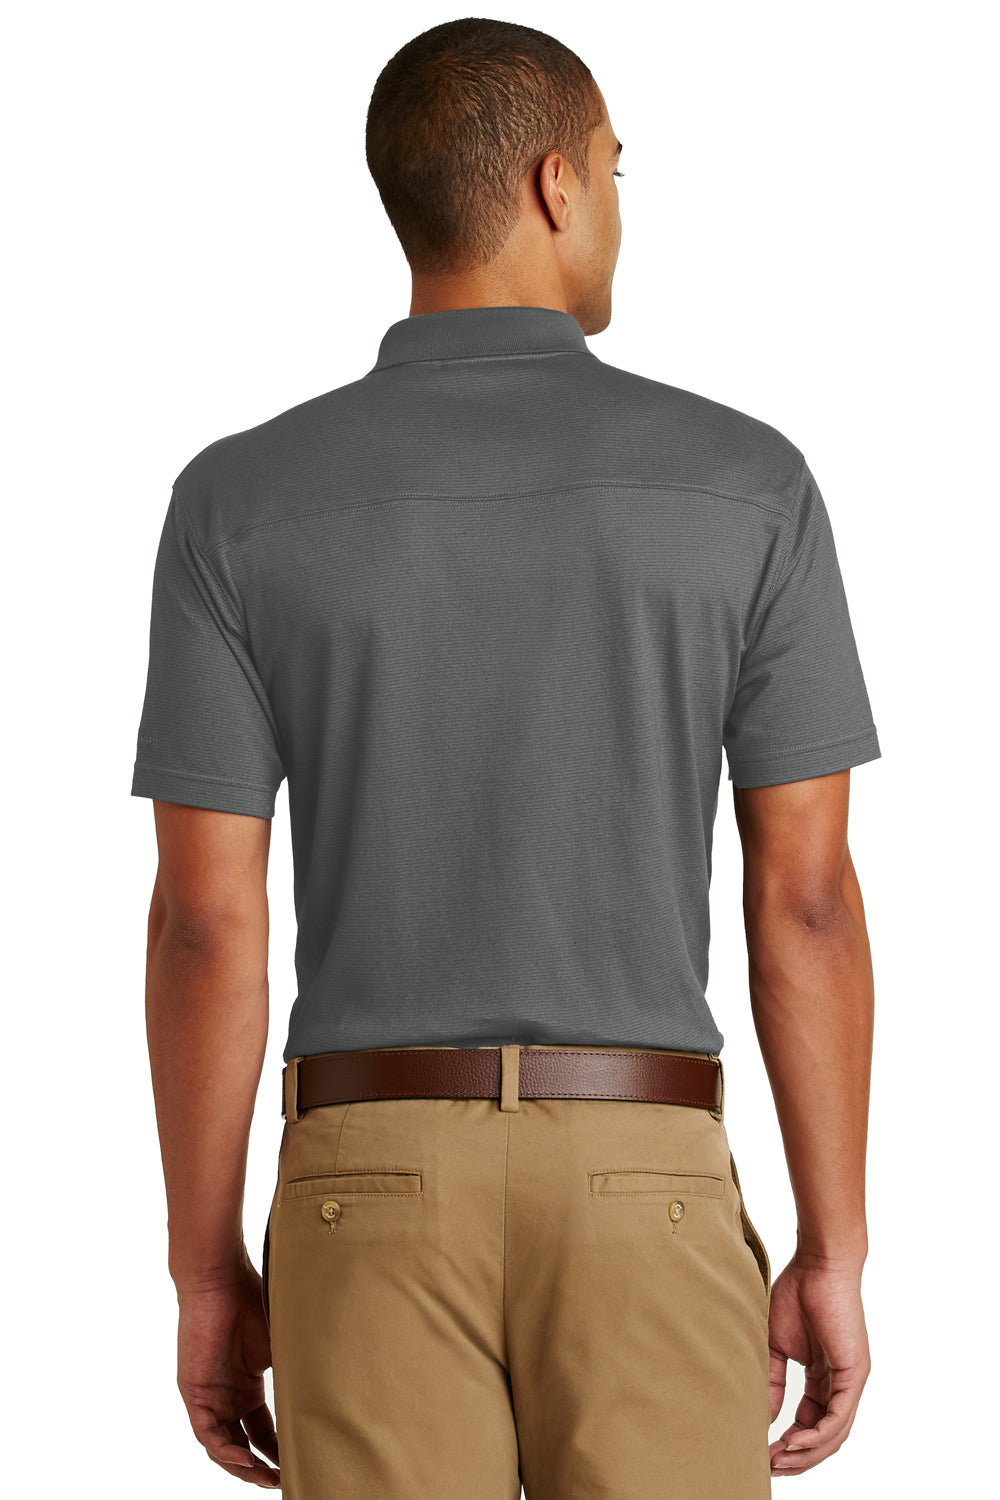 Eddie Bauer EB102 Mens Performance UV Protection Short Sleeve Polo Shirt Steel Grey Model Back